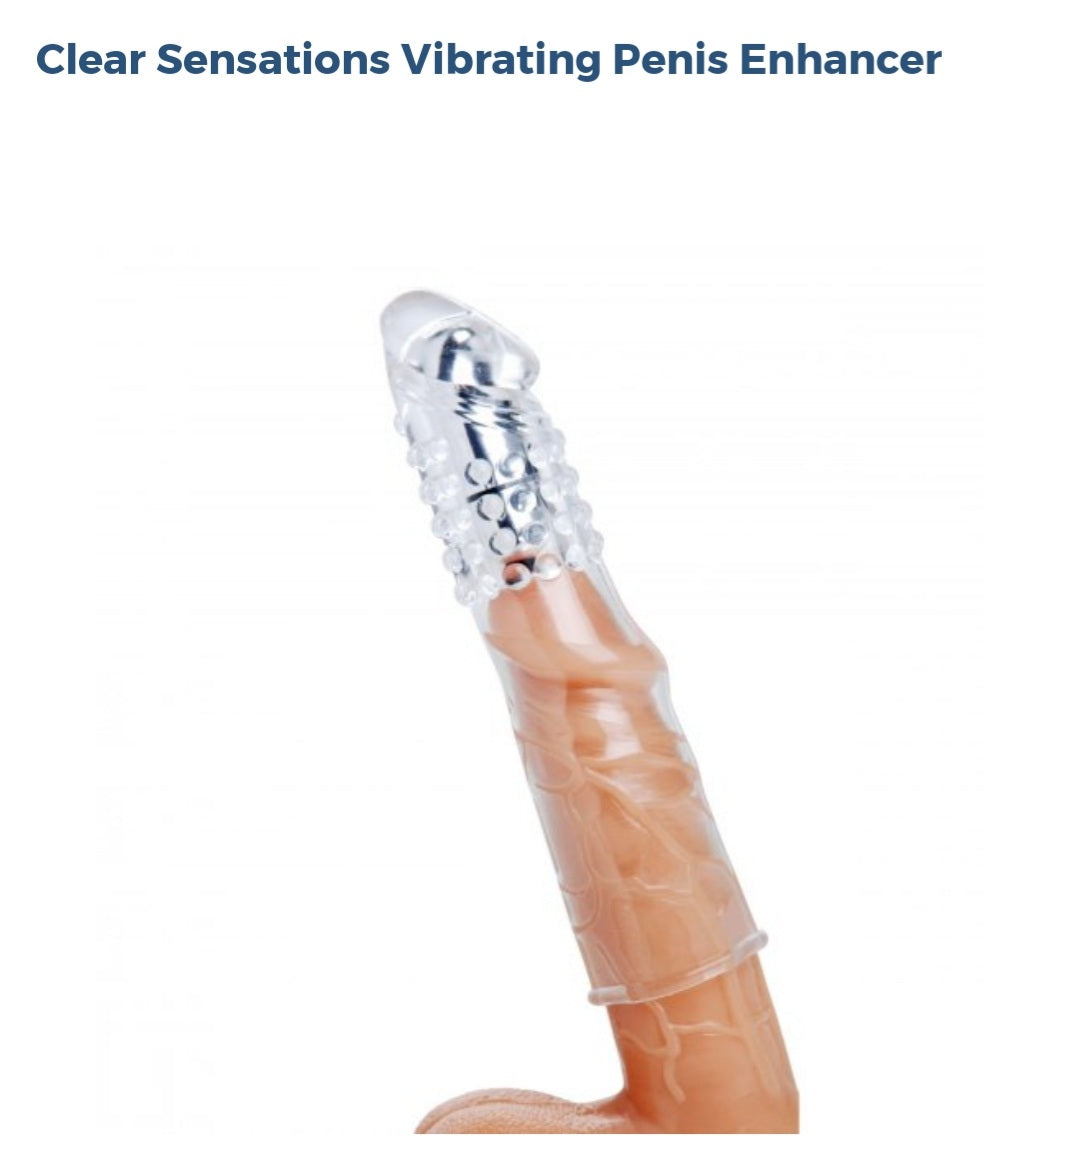 Clear Sensations Vibrating Penis Enhancer